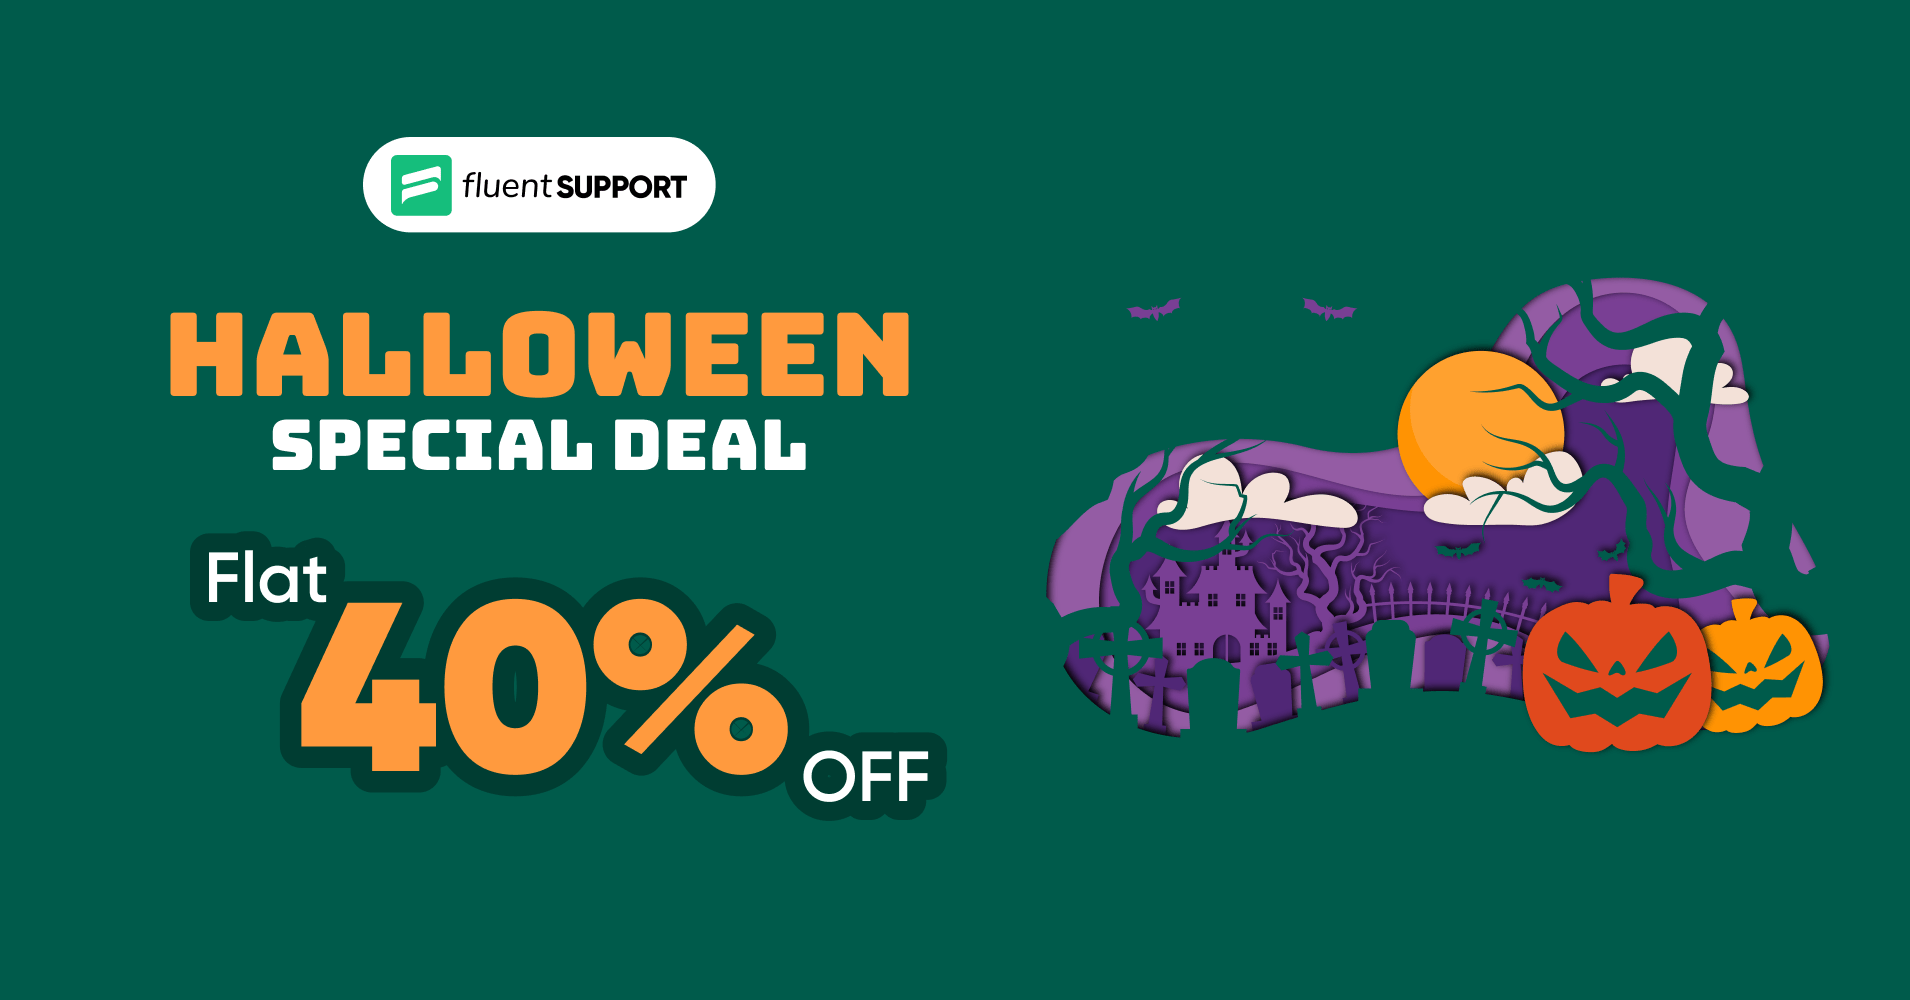 Fluent Support Halloween Deals